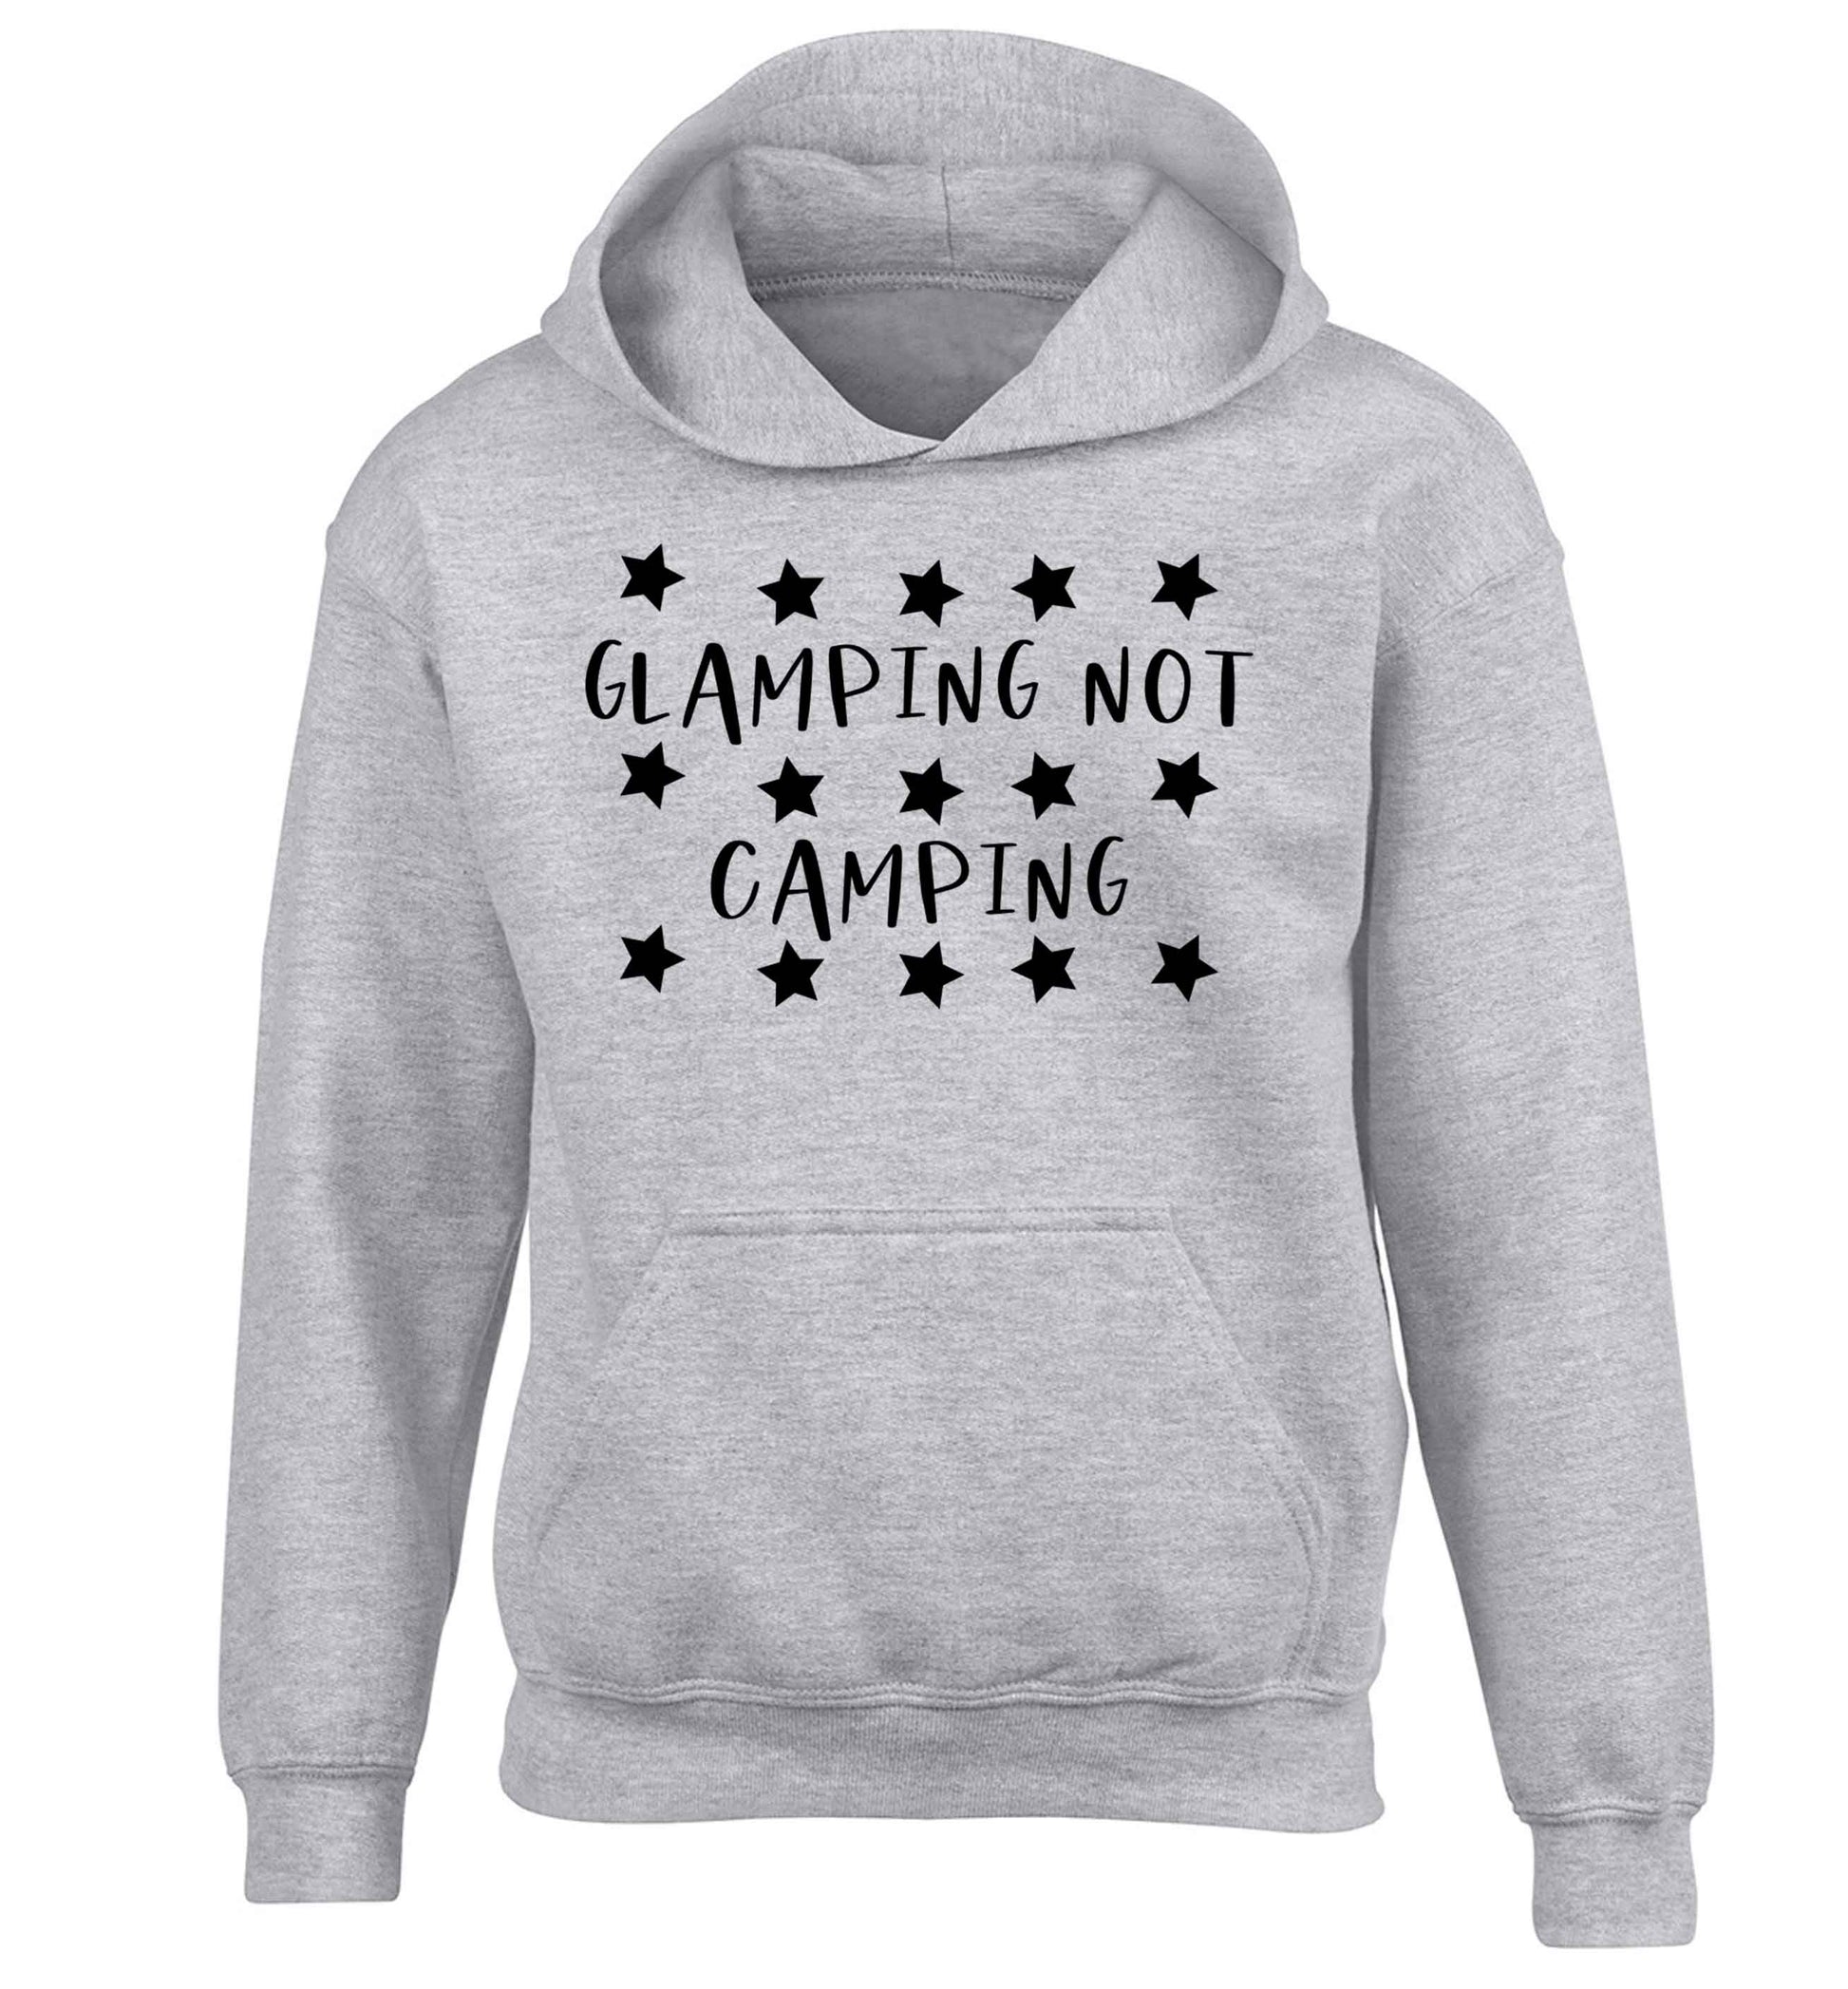 Glamping not camping children's grey hoodie 12-13 Years